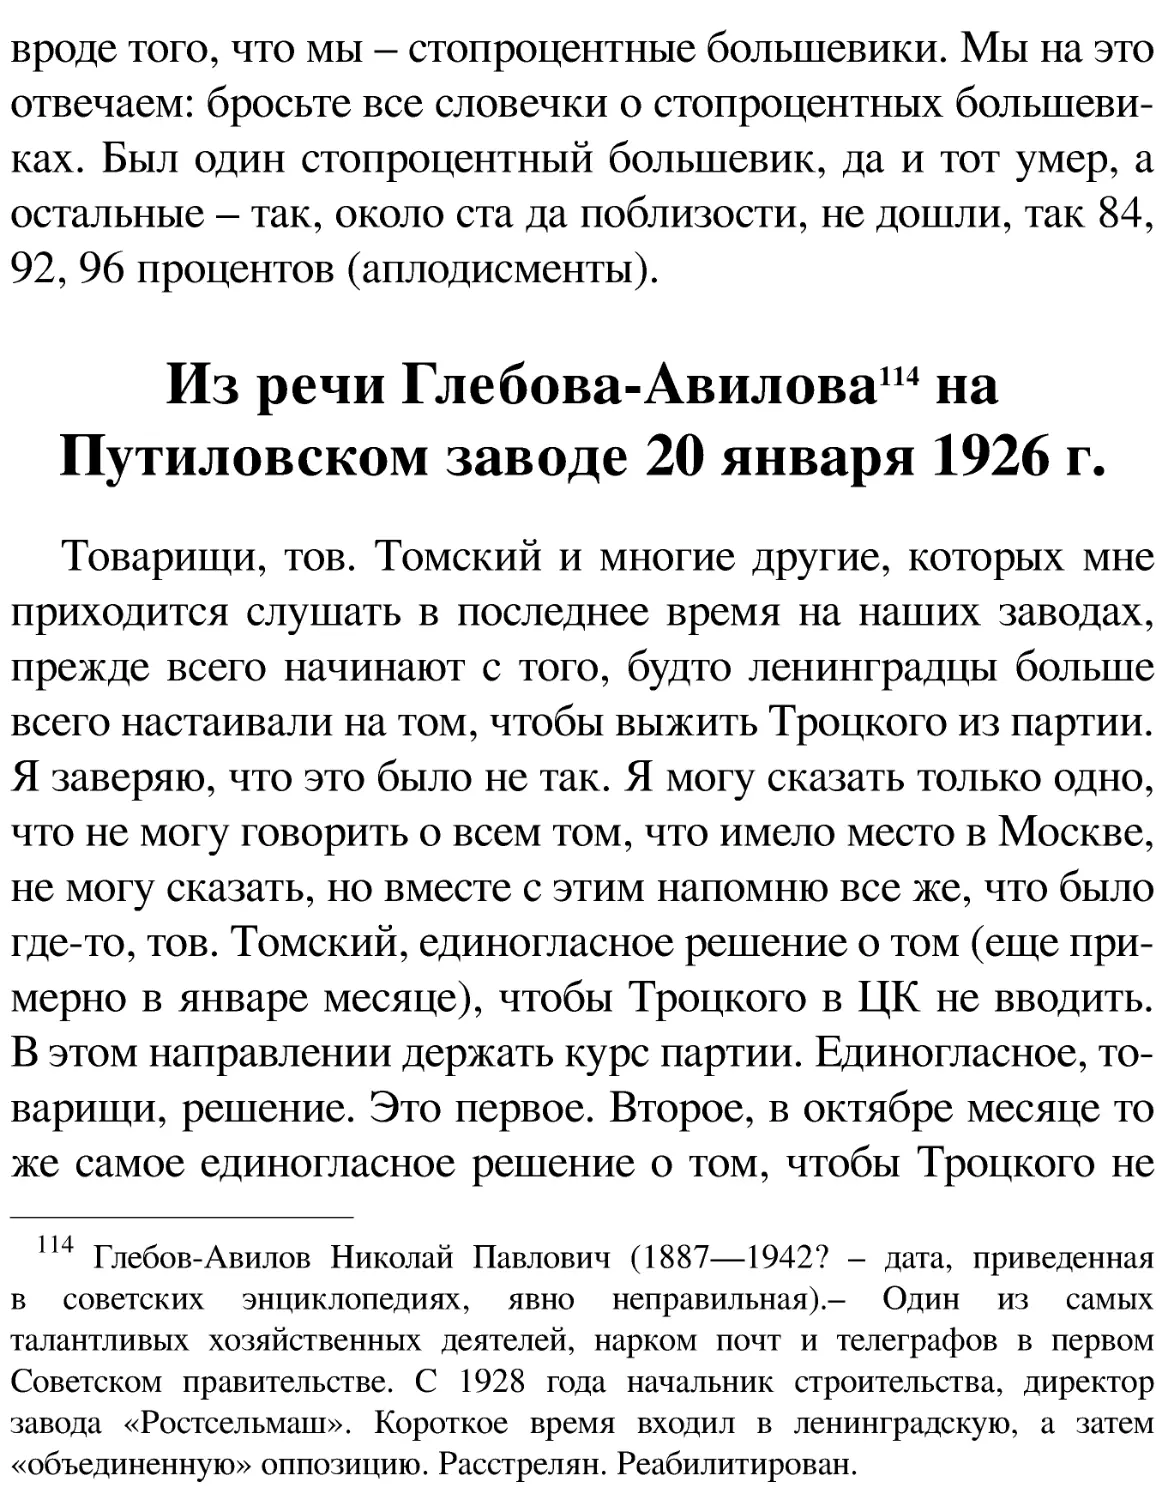 Из речи Глебова-Авилова[114] на Путиловском заводе 20 января 1926 г.